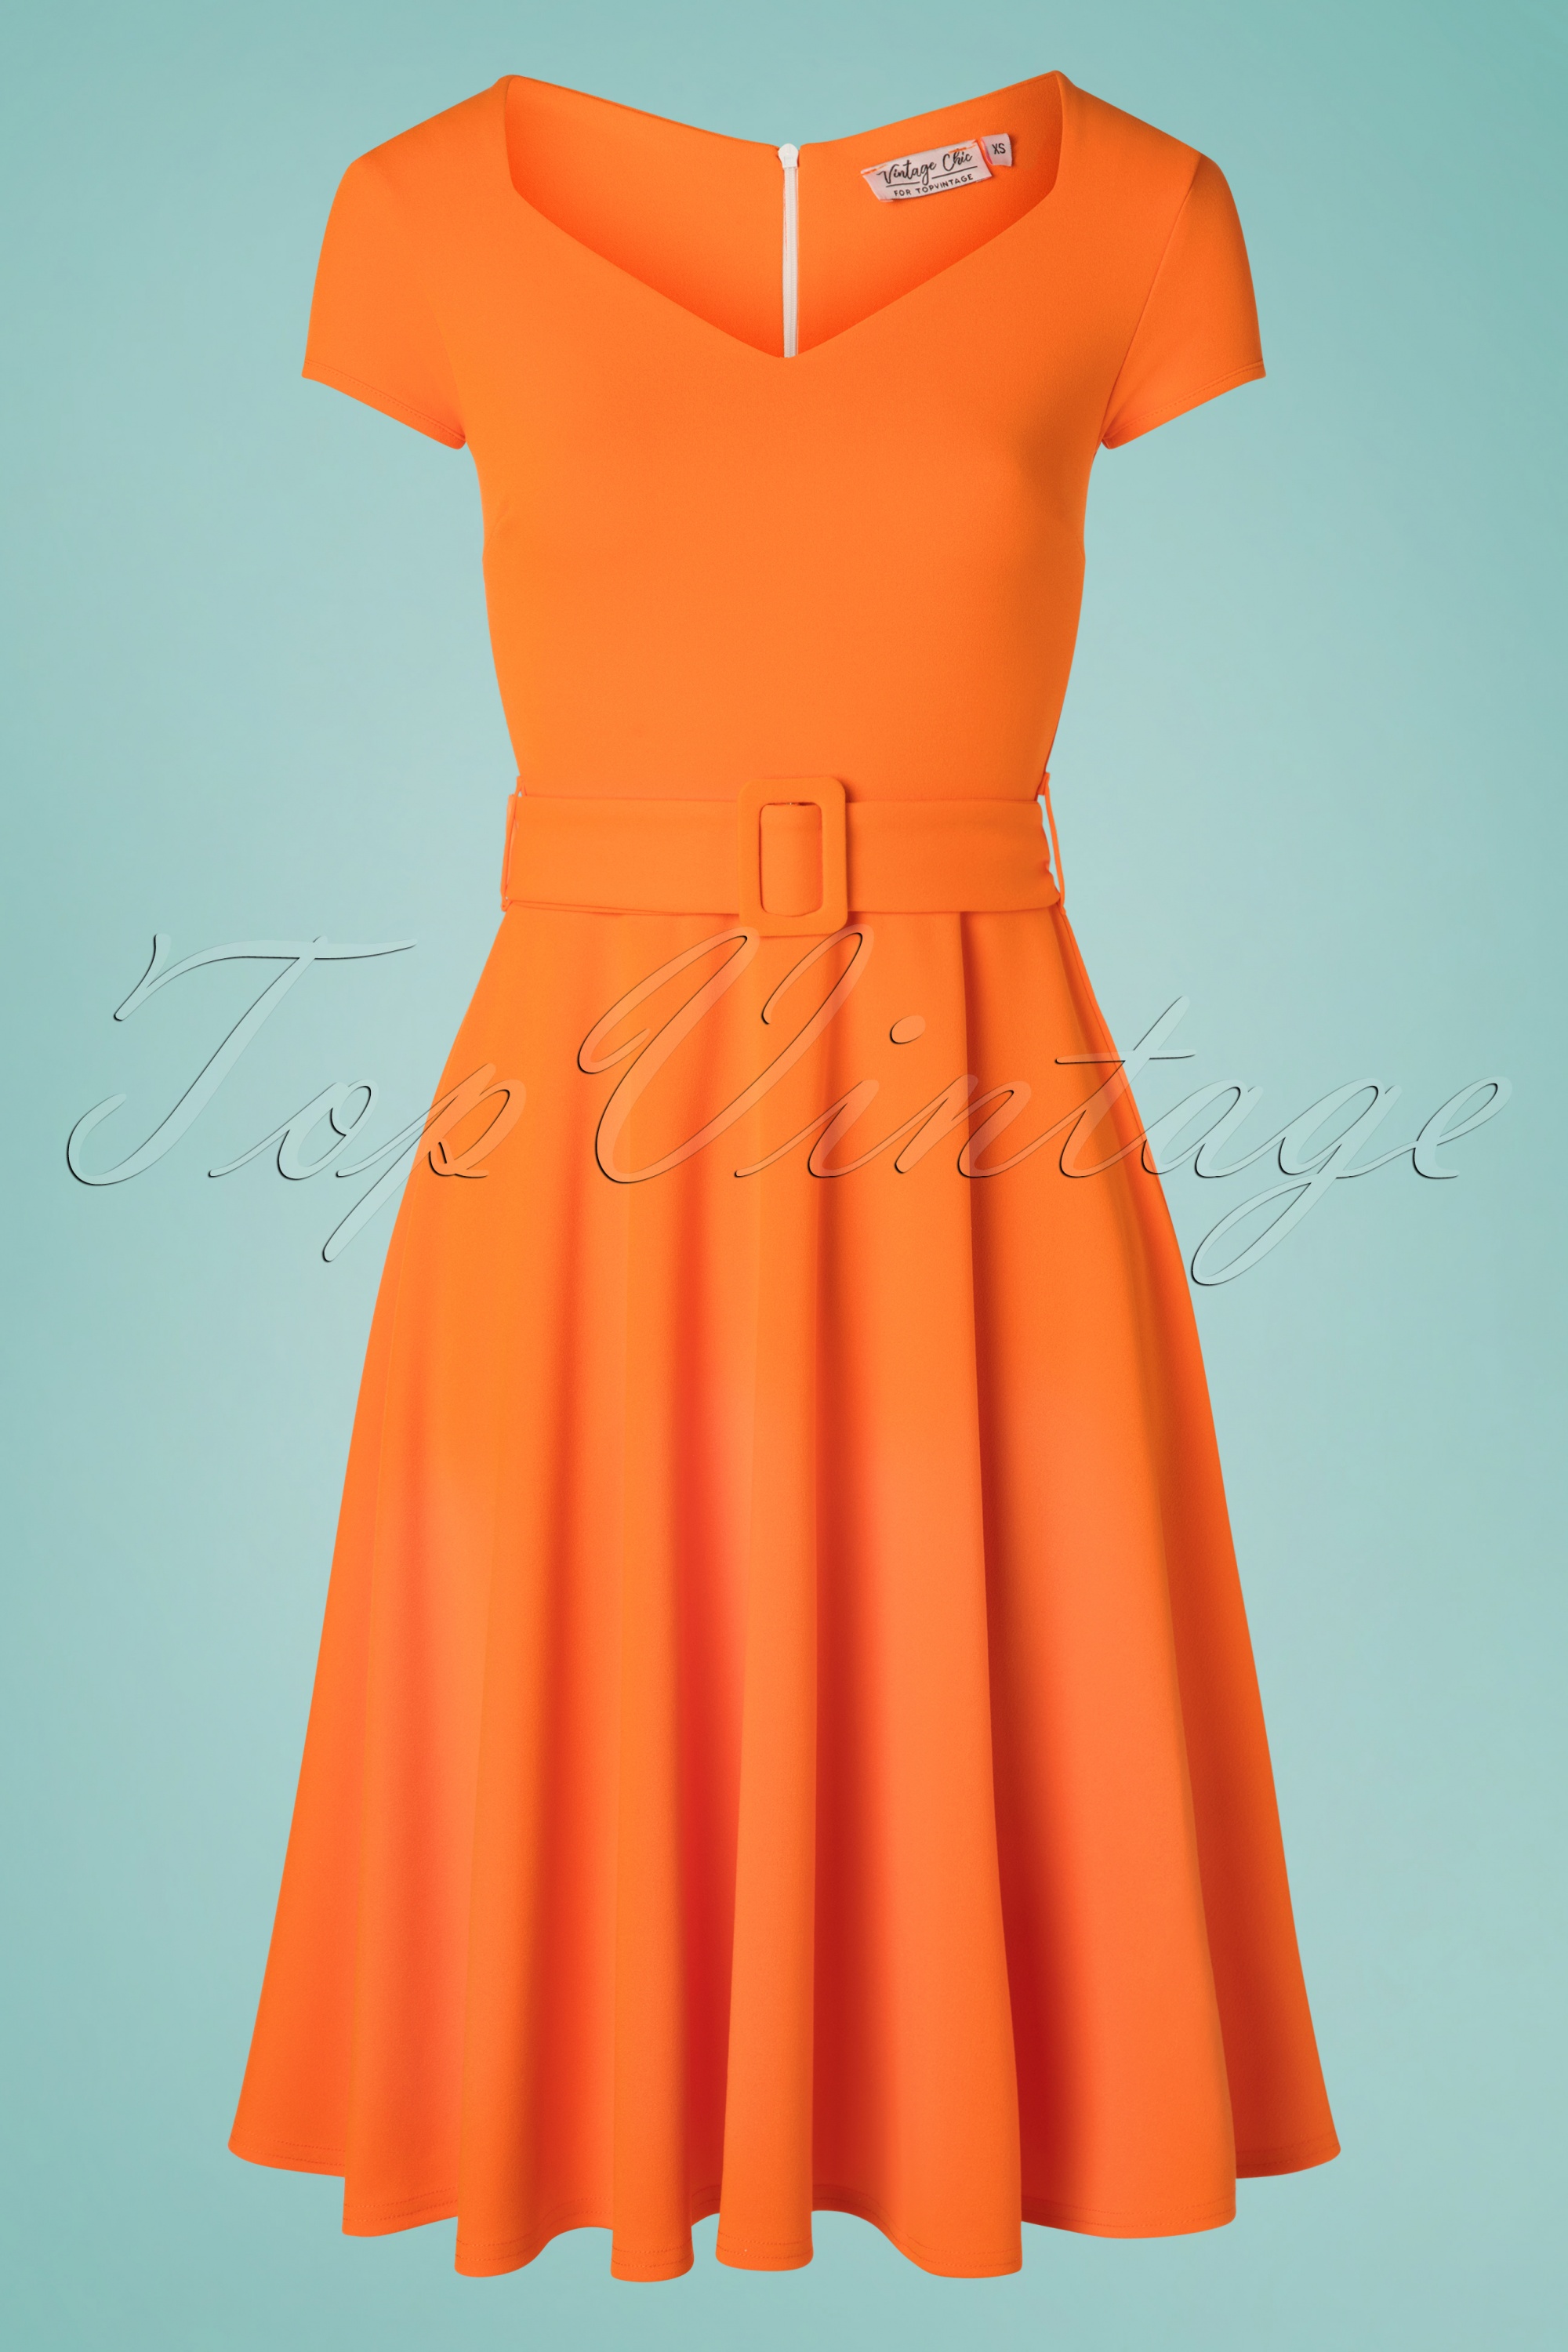 Vintage Chic for Topvintage - Myrtle swingjurk in oranje